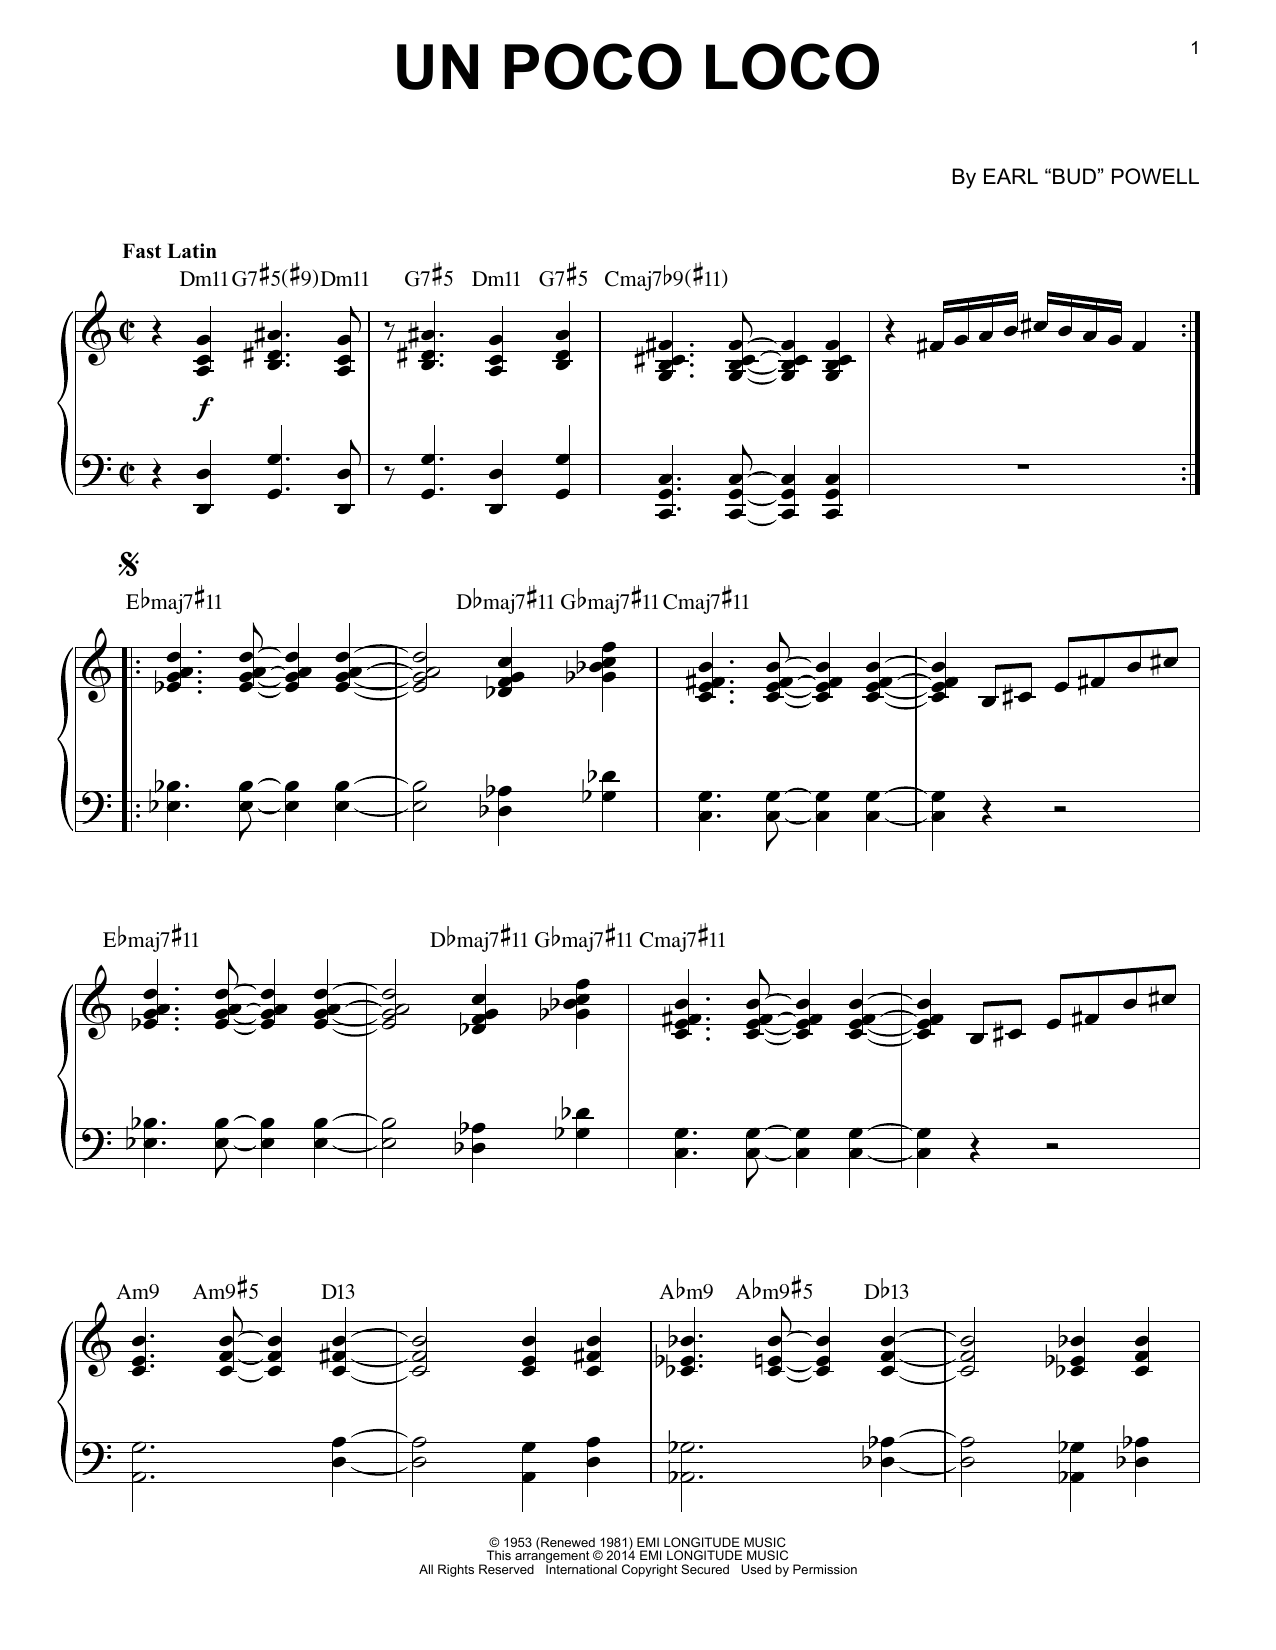 Learn Bud Powell Un Poco Loco sheet music notes, chords. 